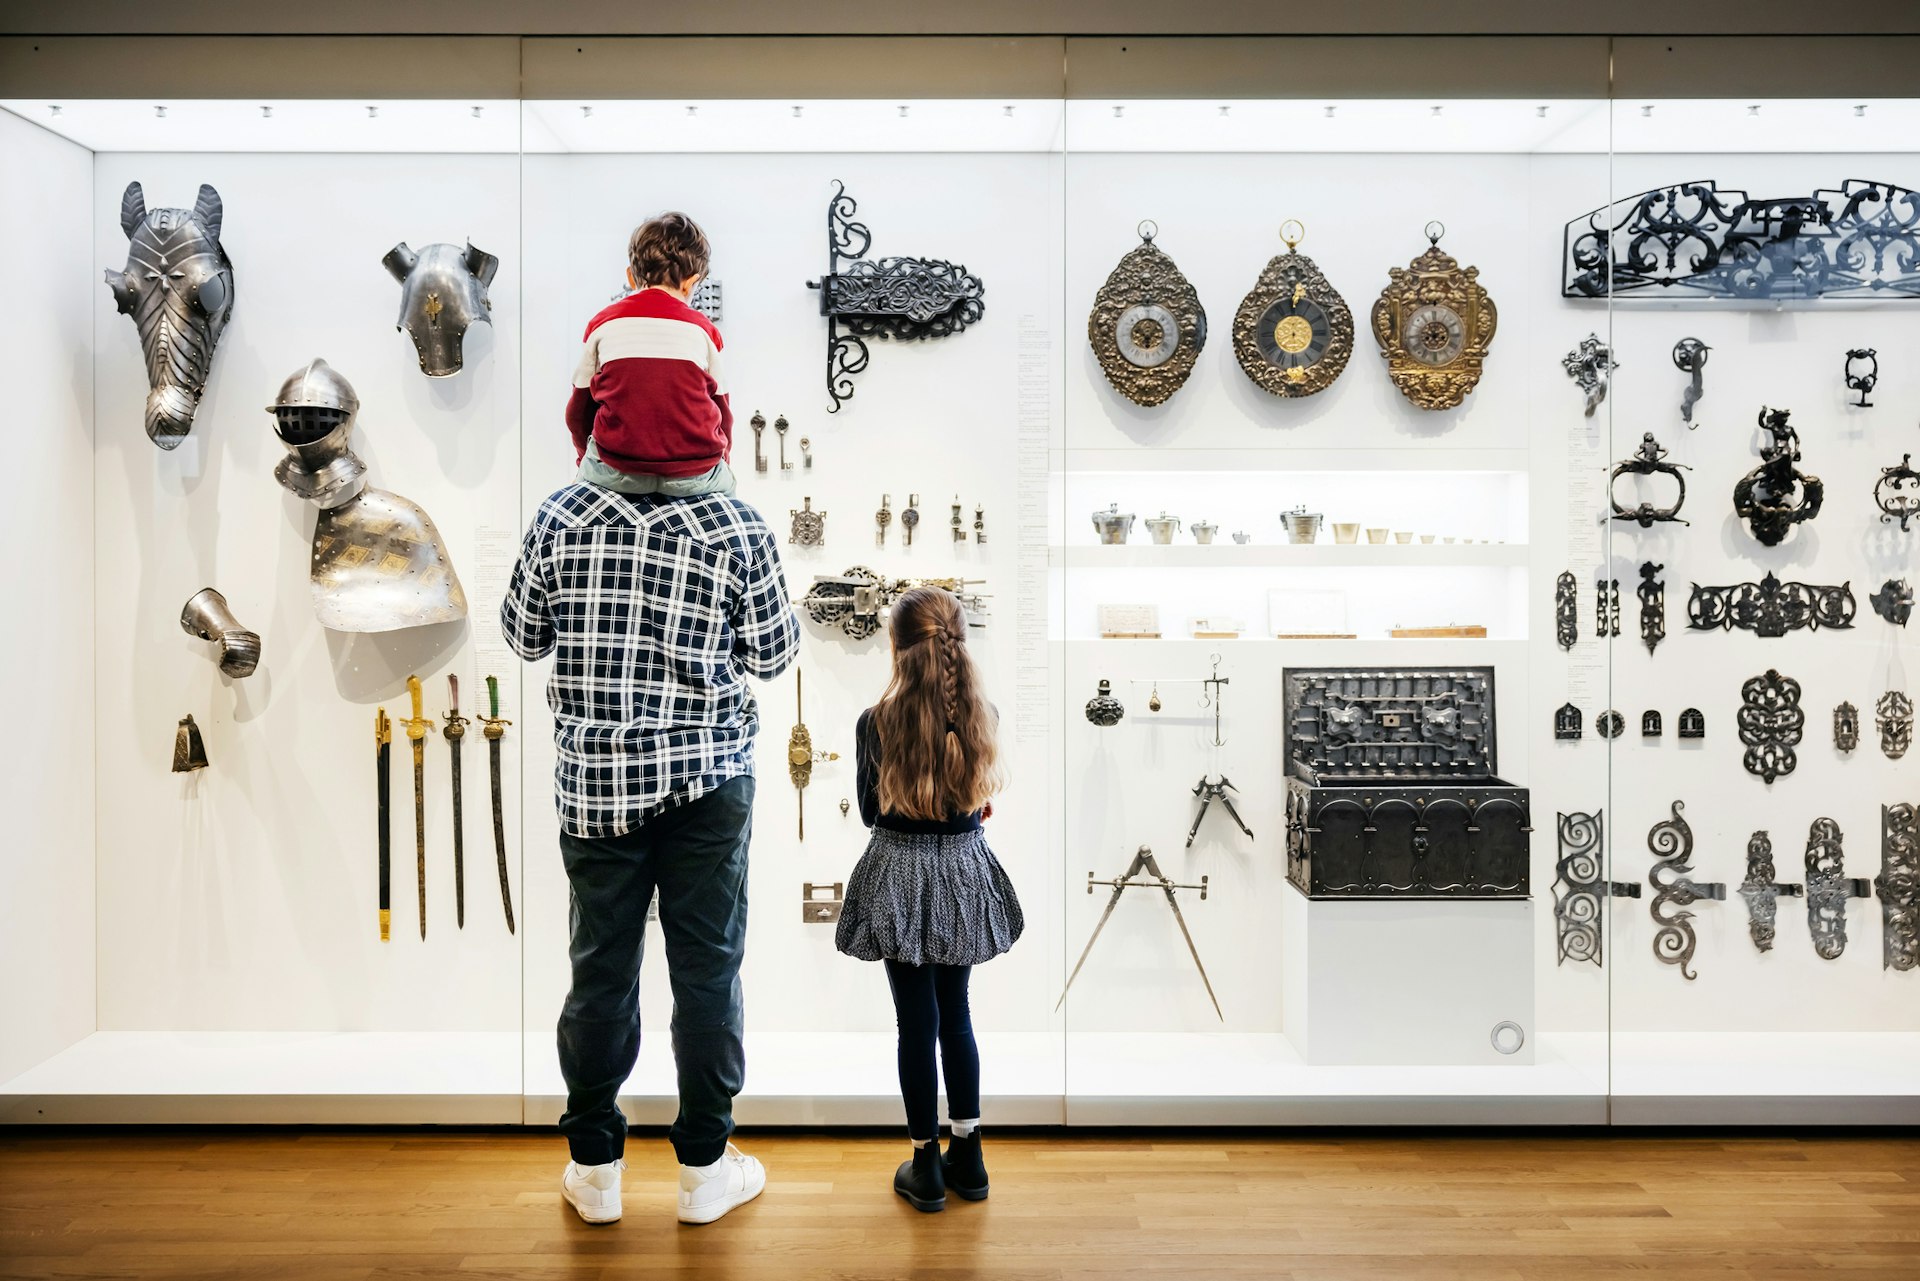 A family explores a museum together.